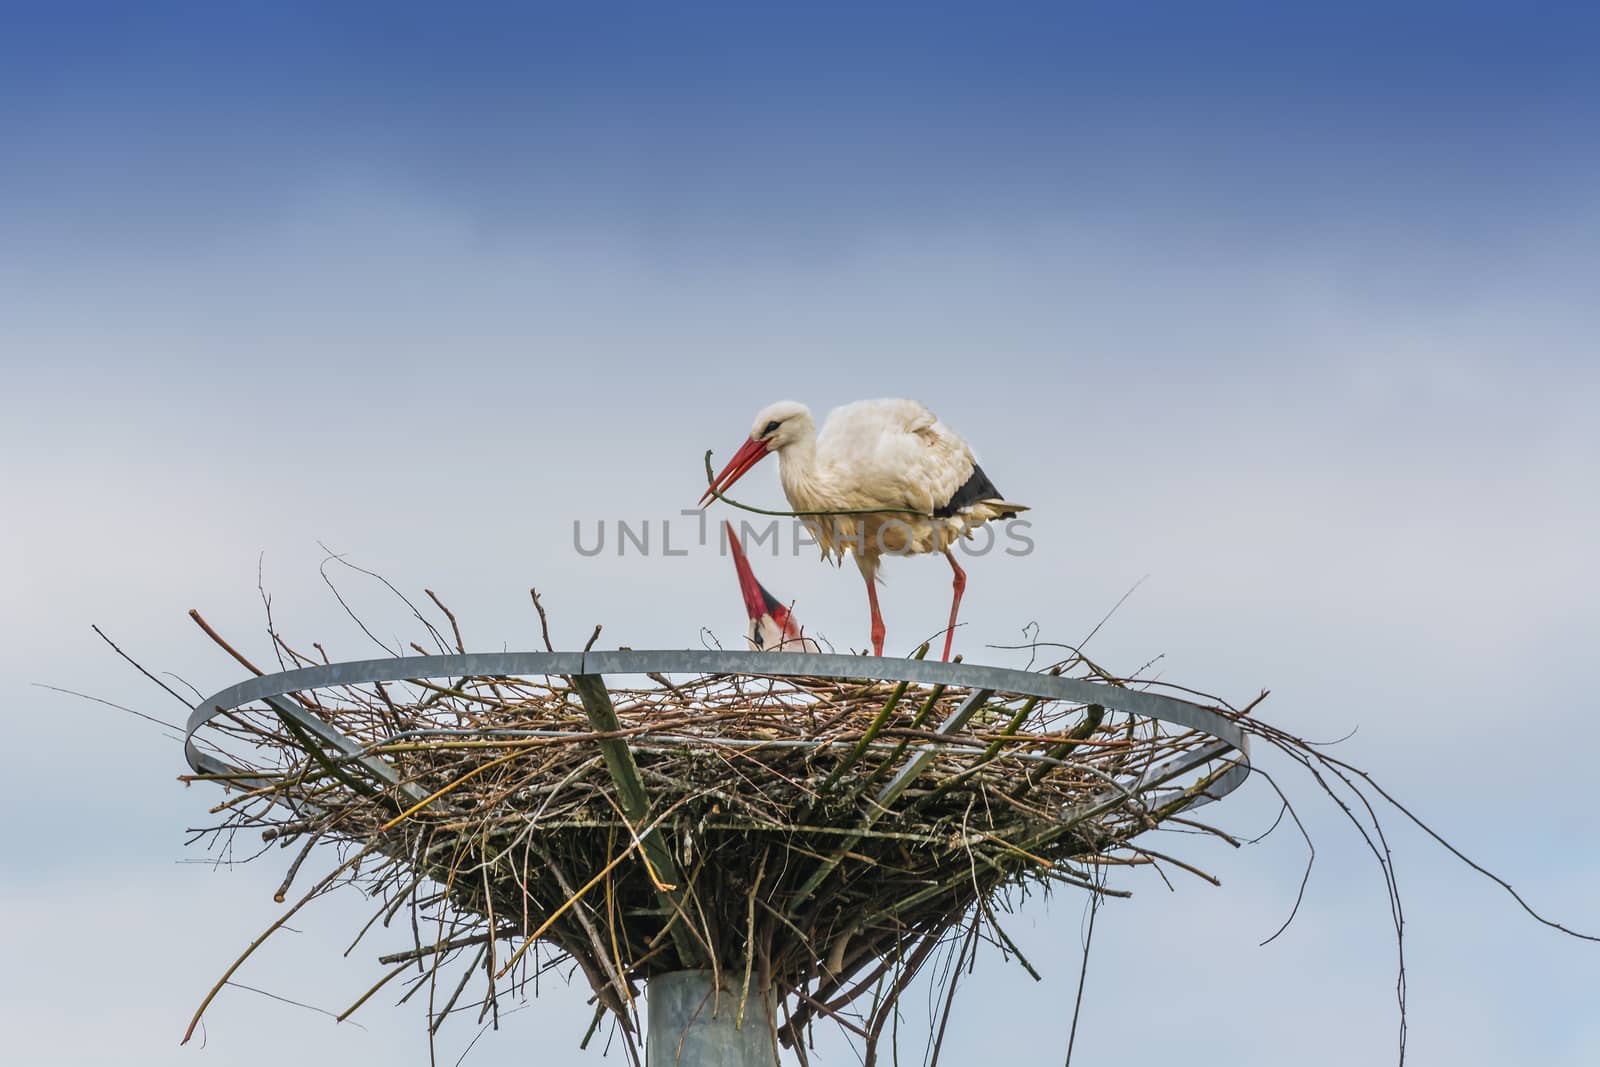 Storks nest building by JFsPic